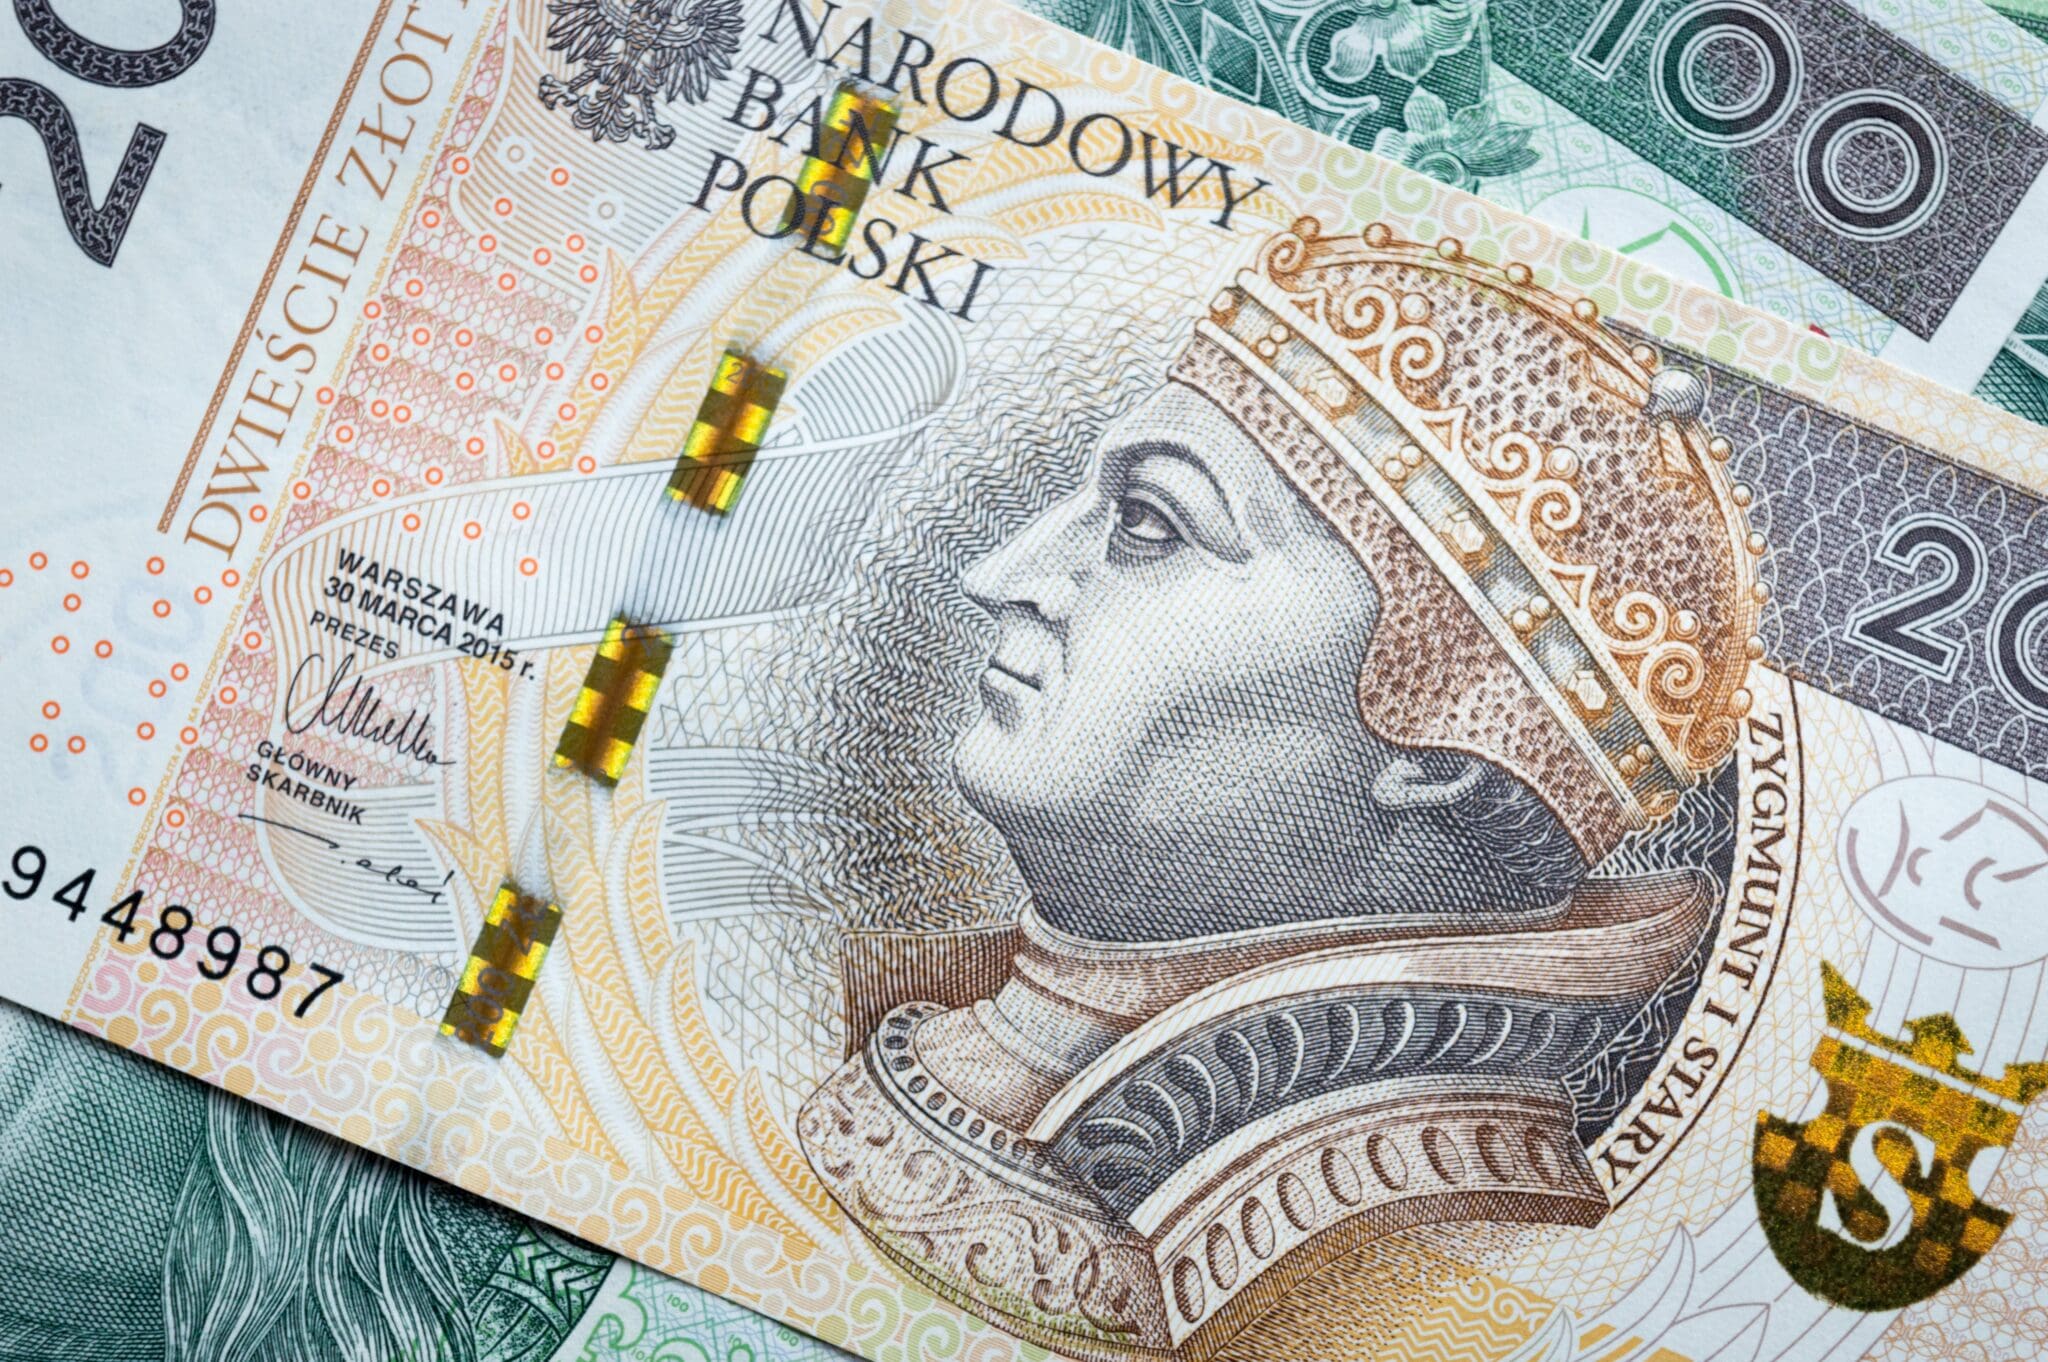 Banknot 200 PLN na zdjęciu